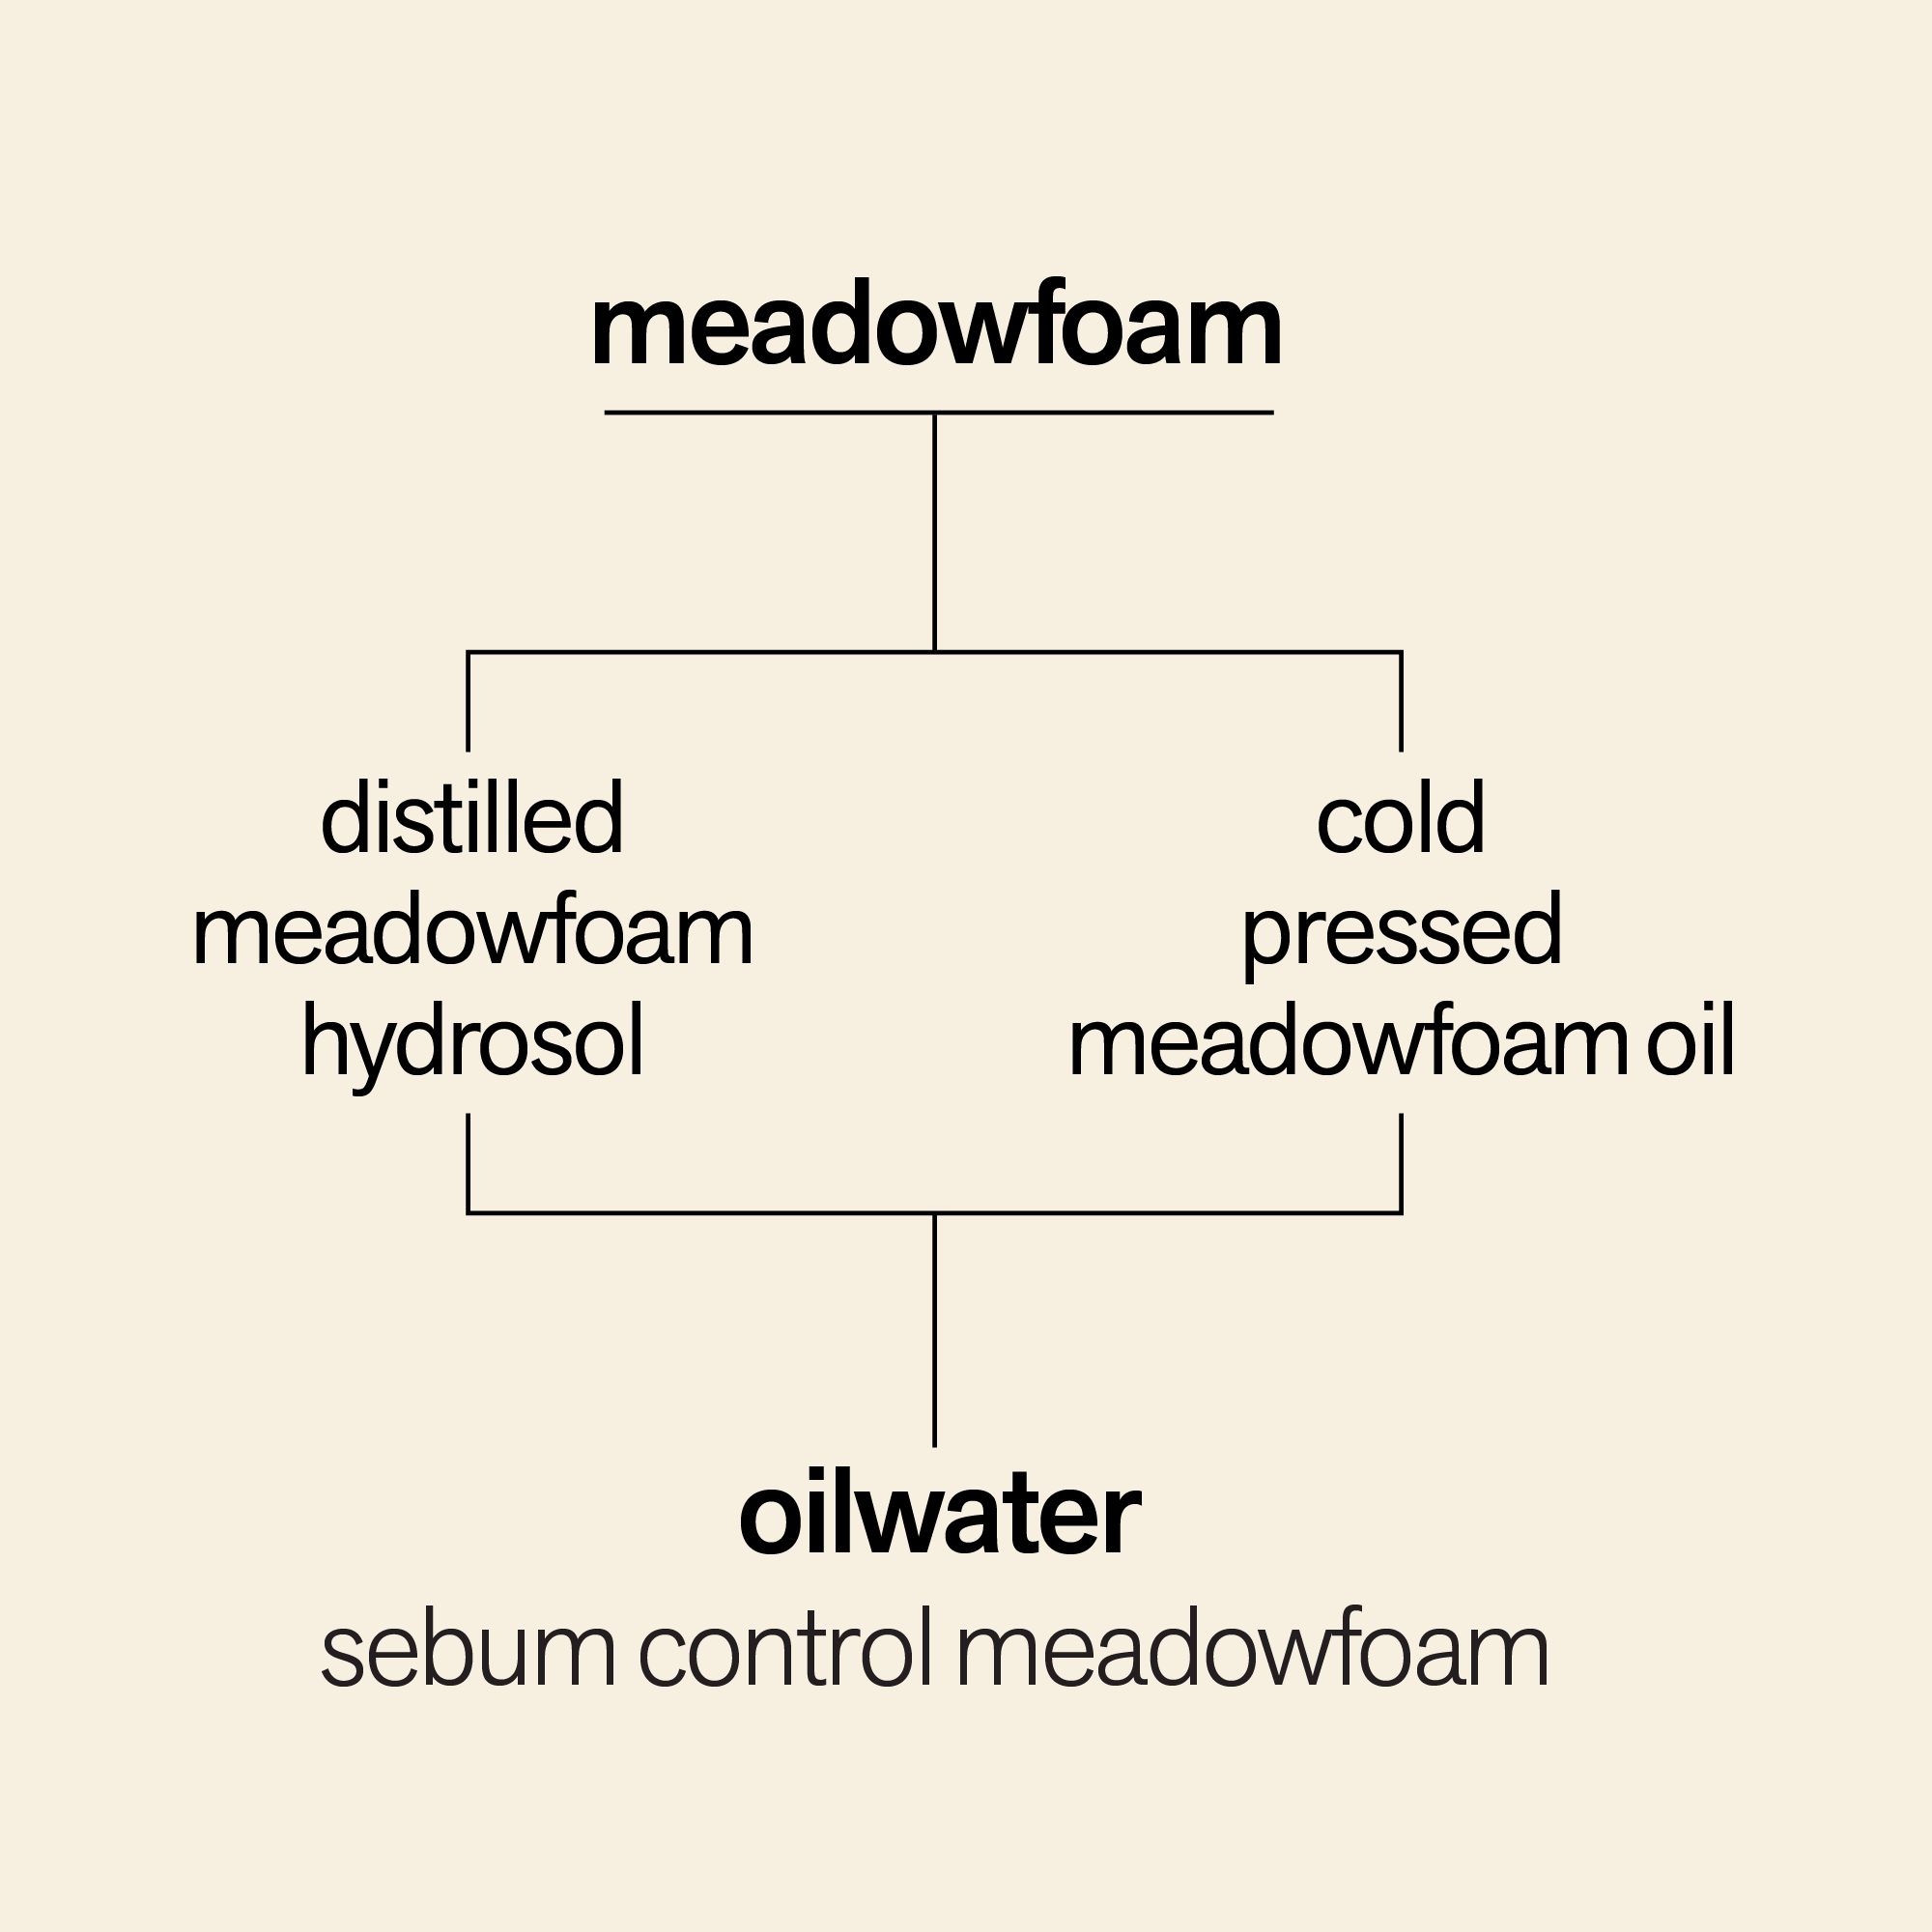 Oilwater Sebum Control Meadowfoam